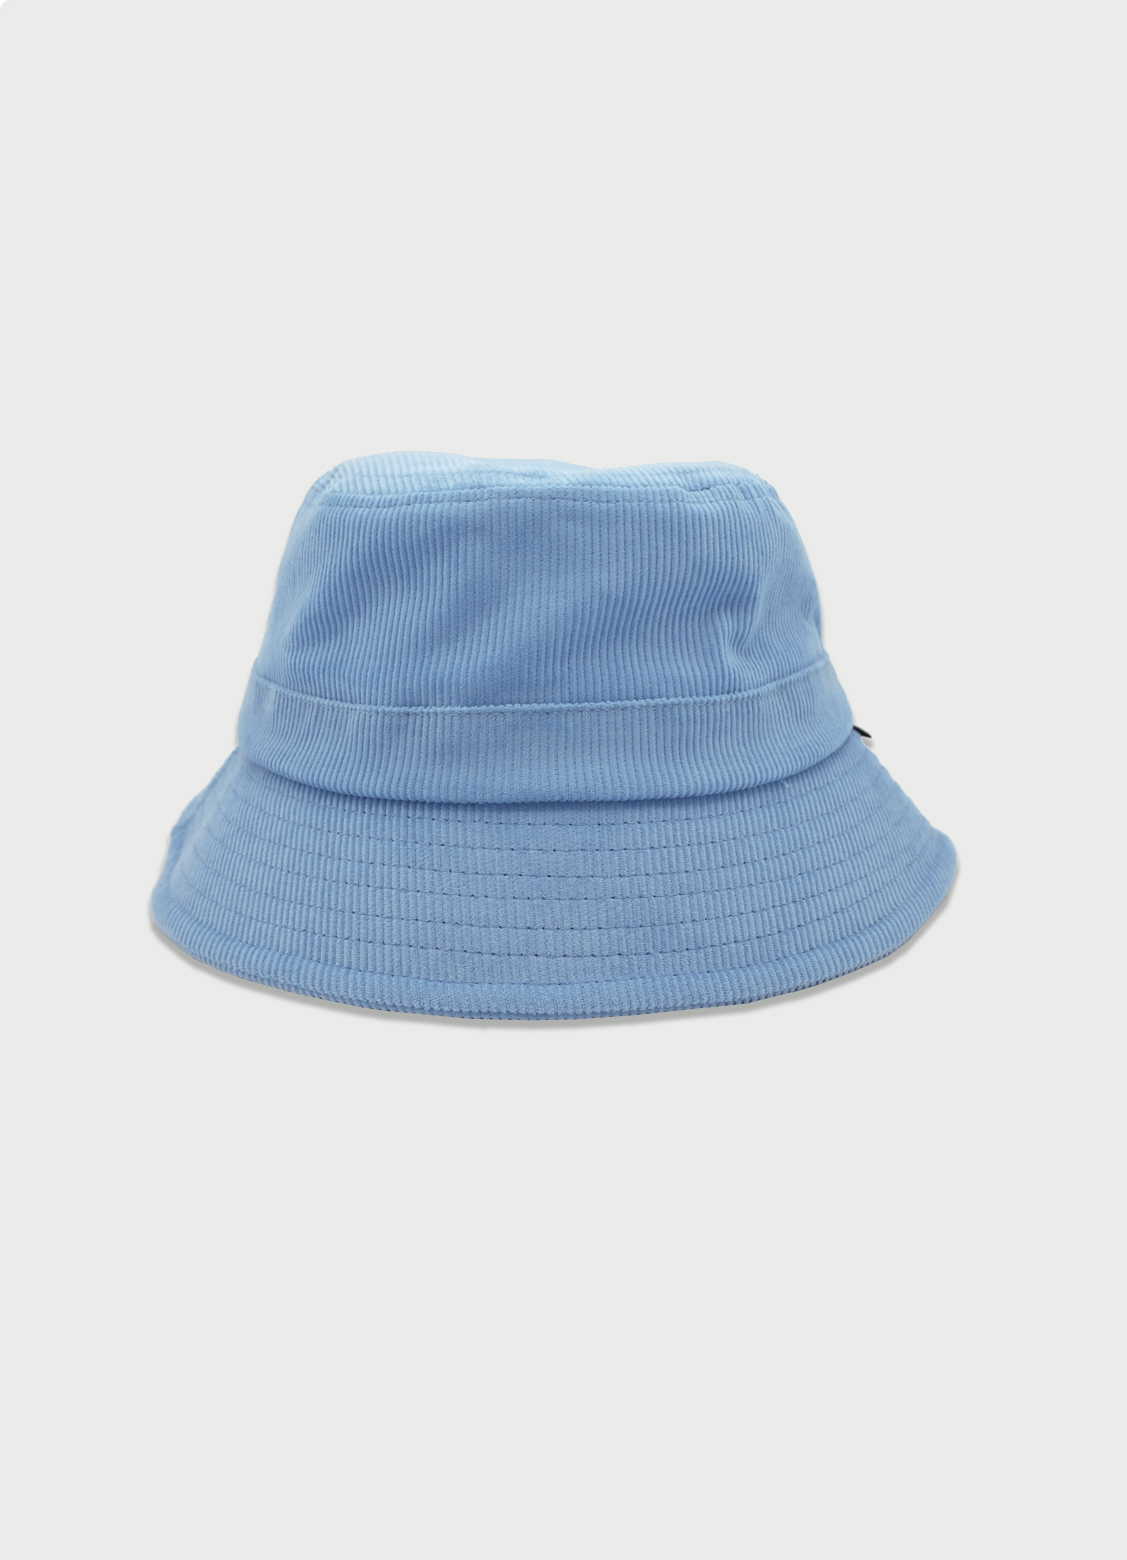 Paint Your Sky Blue Corduroy Bucket Hat - URBANE MUSE CHRIS SMITH®